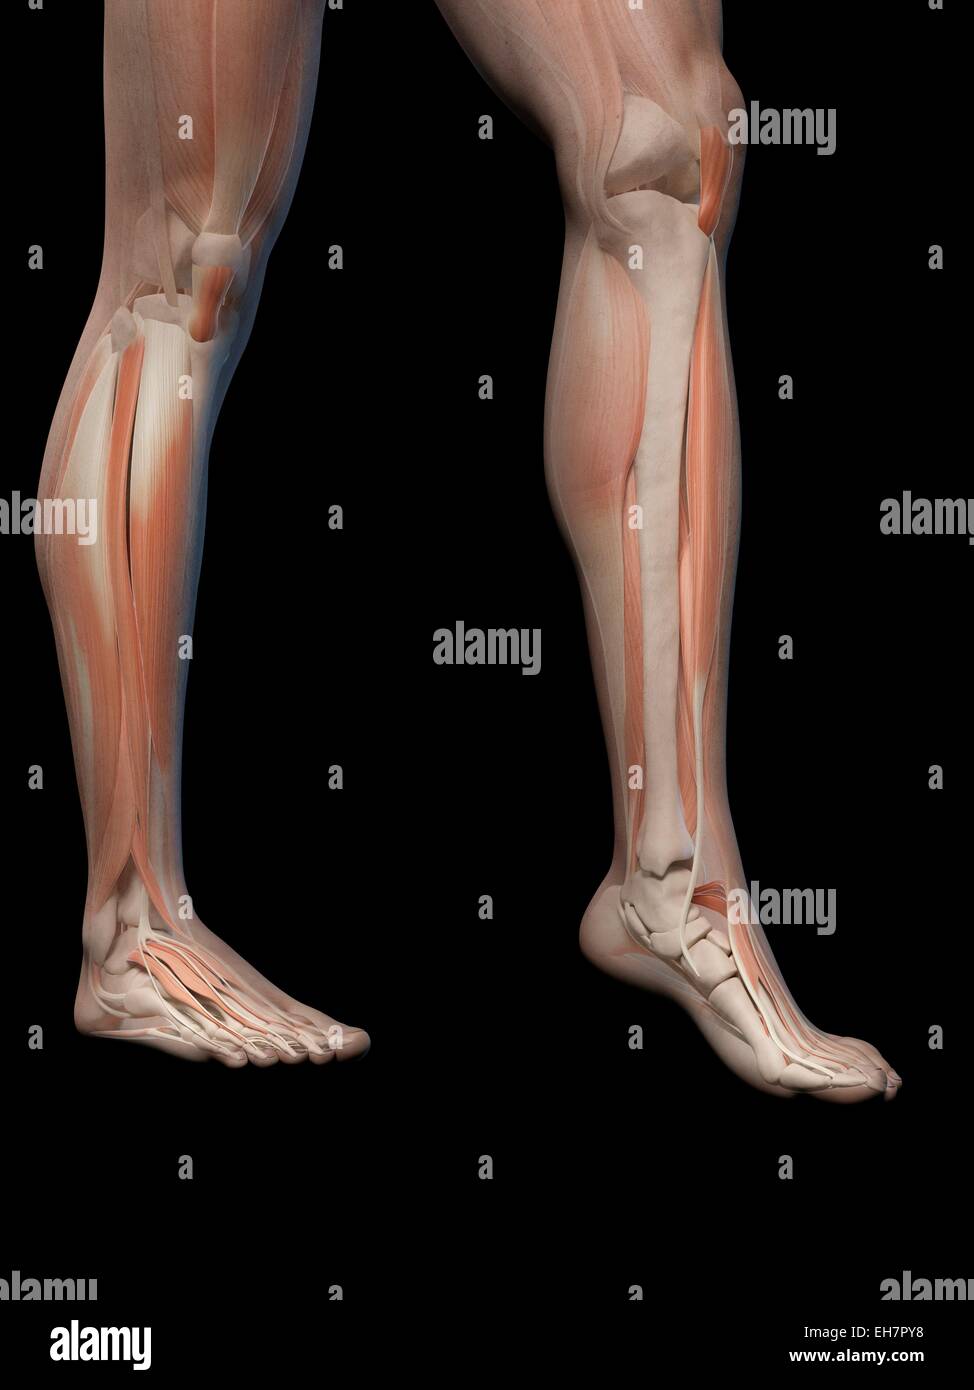 Human leg and foot anatomy, illustration Stock Photo